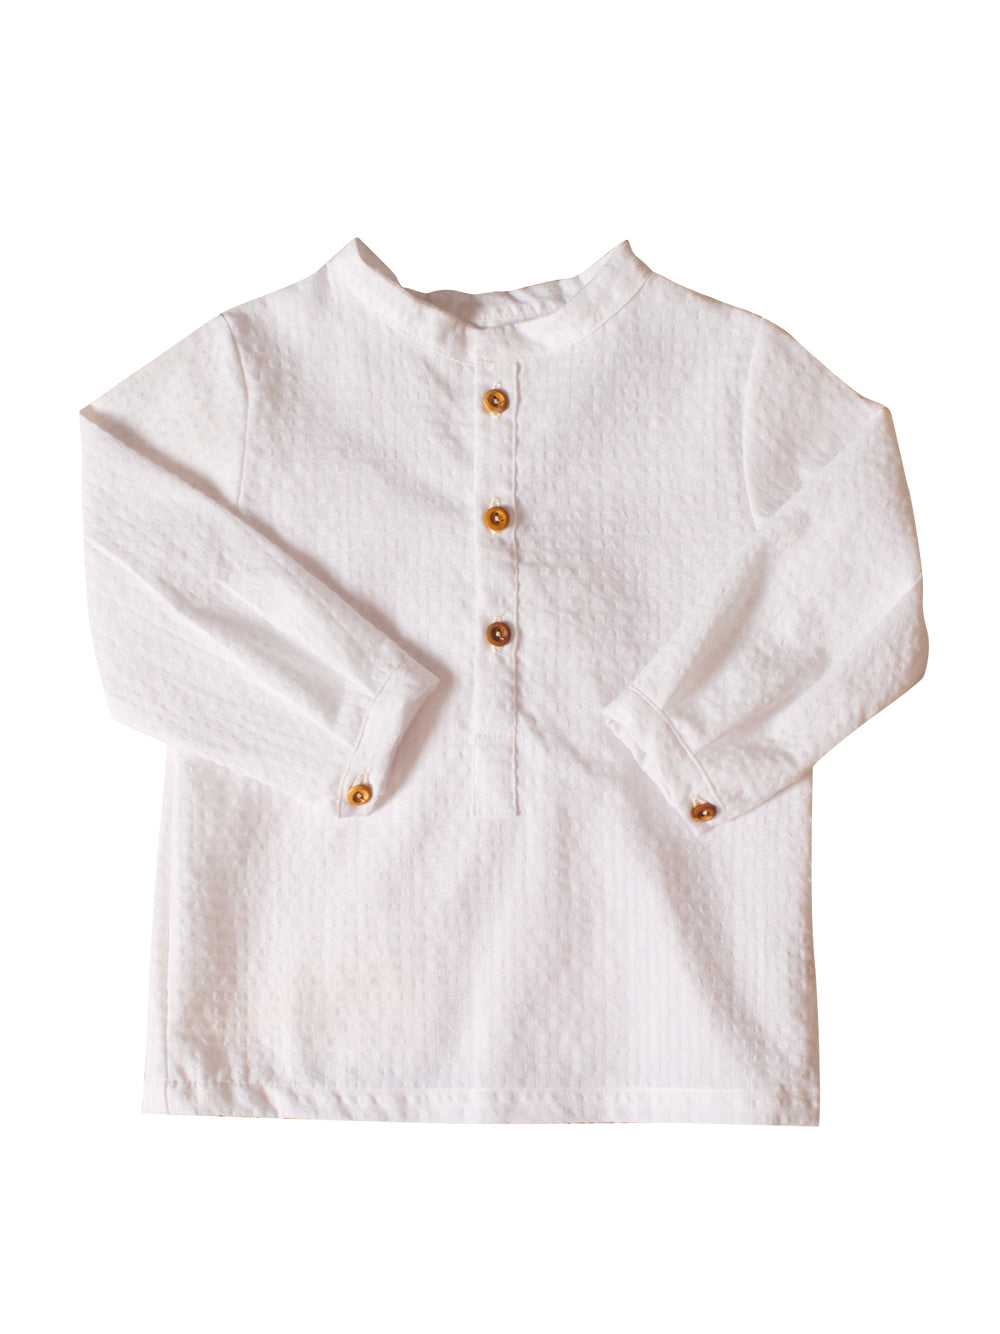 White Gingham Shirt